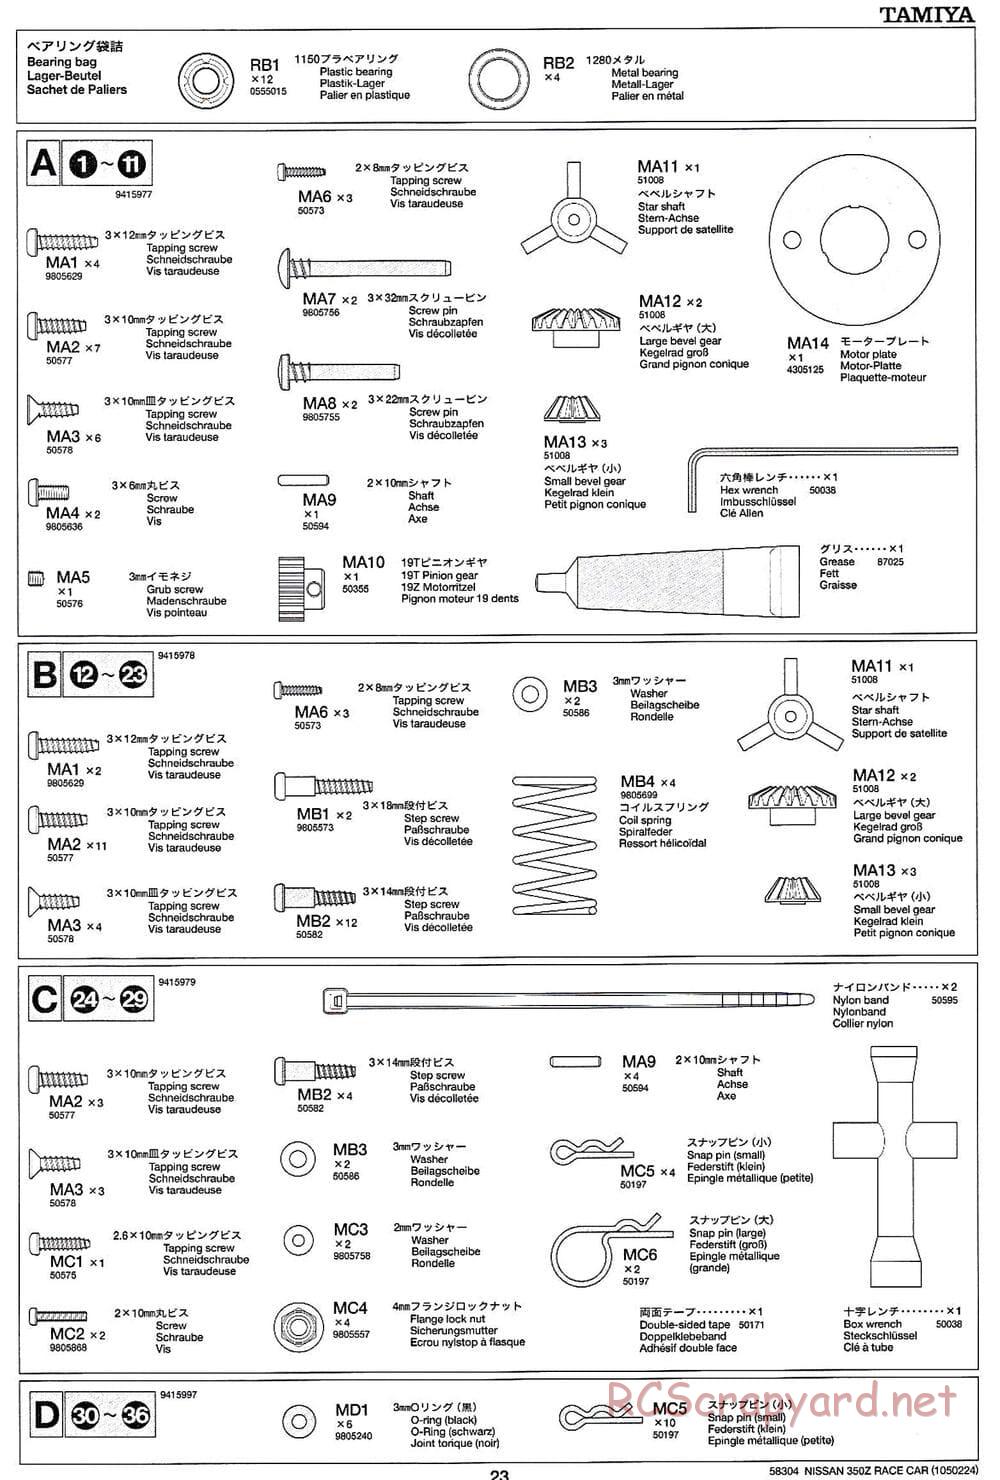 Tamiya - Nissan 350Z Race-Car - TT-01 Chassis - Manual - Page 23